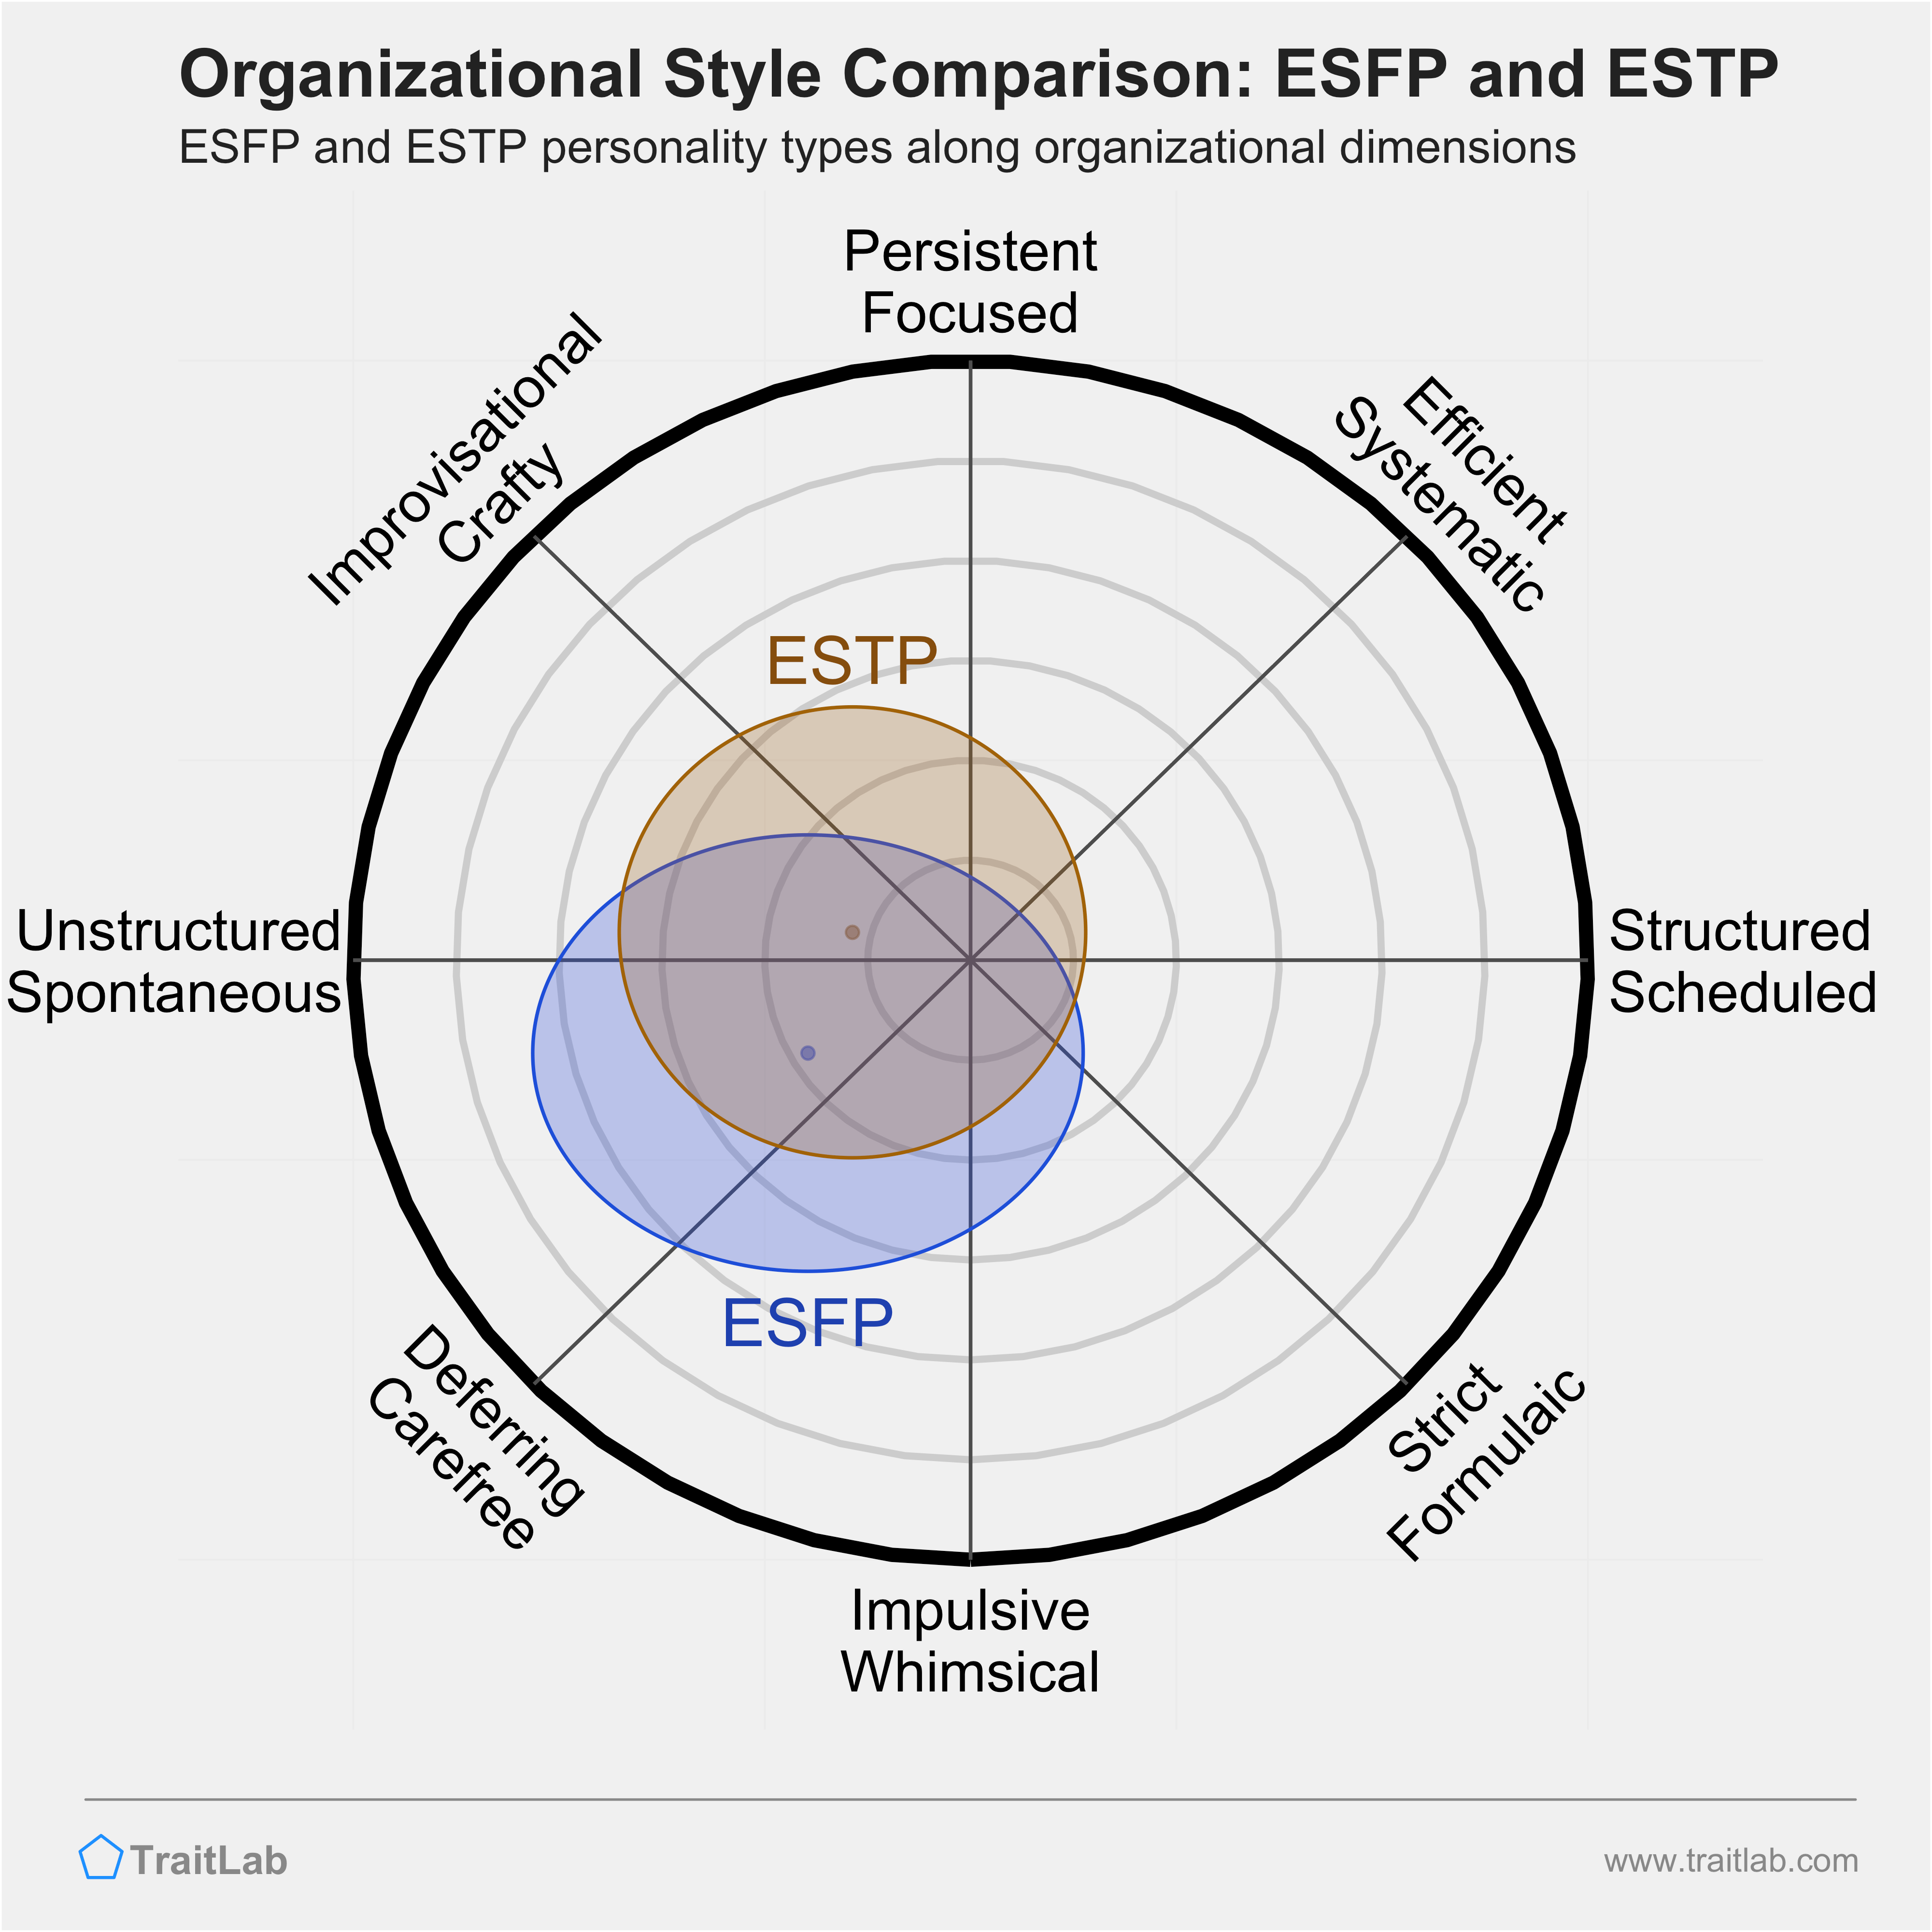 ESFP and ESTP comparison across organizational dimensions